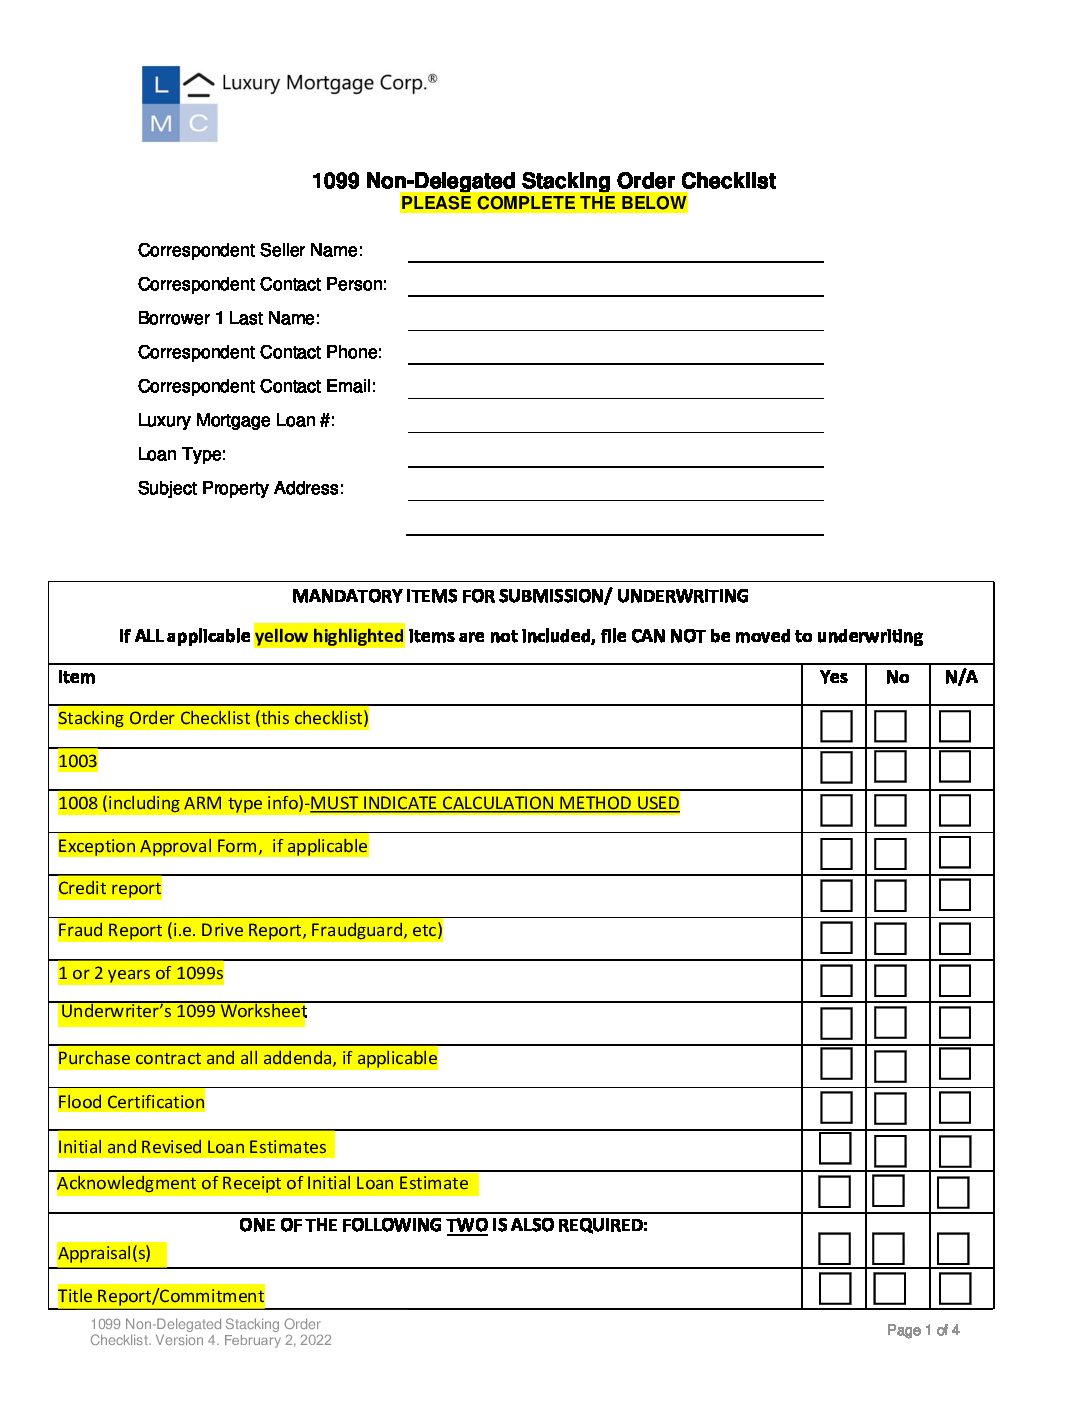 CORR 1099 Non-Delegated Stacking Order Checklist